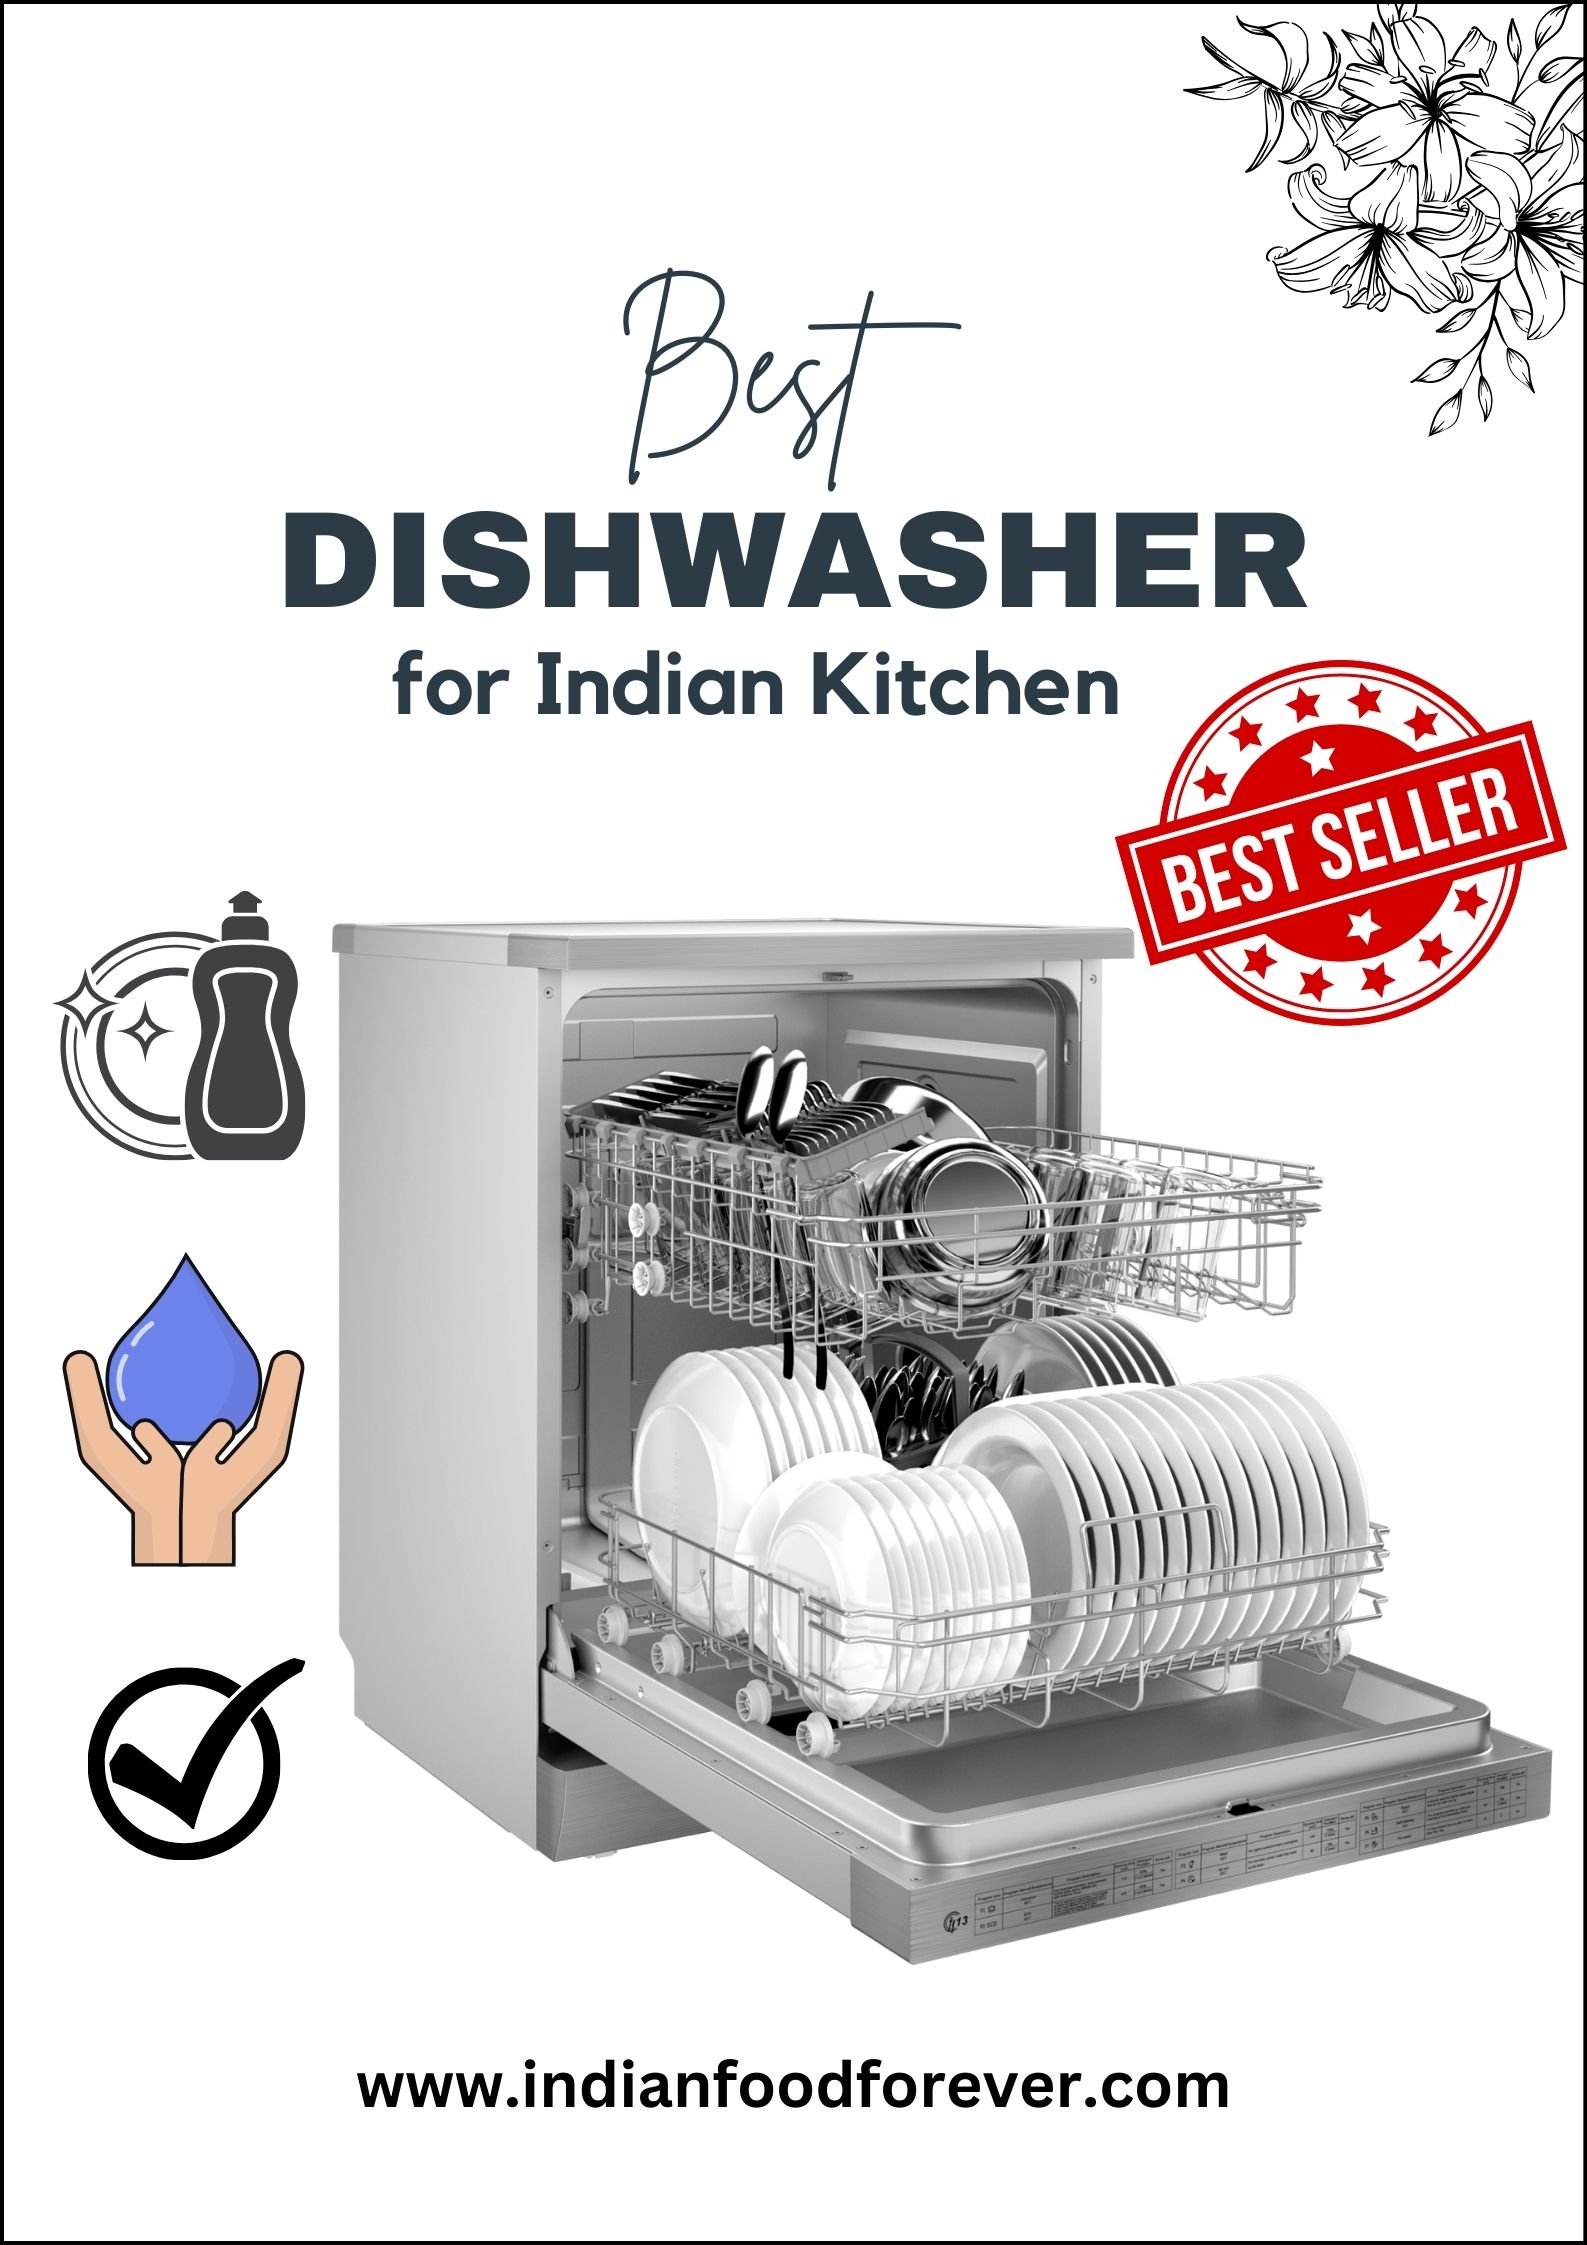 Best Dishwasher For Indian Kitchen 2023